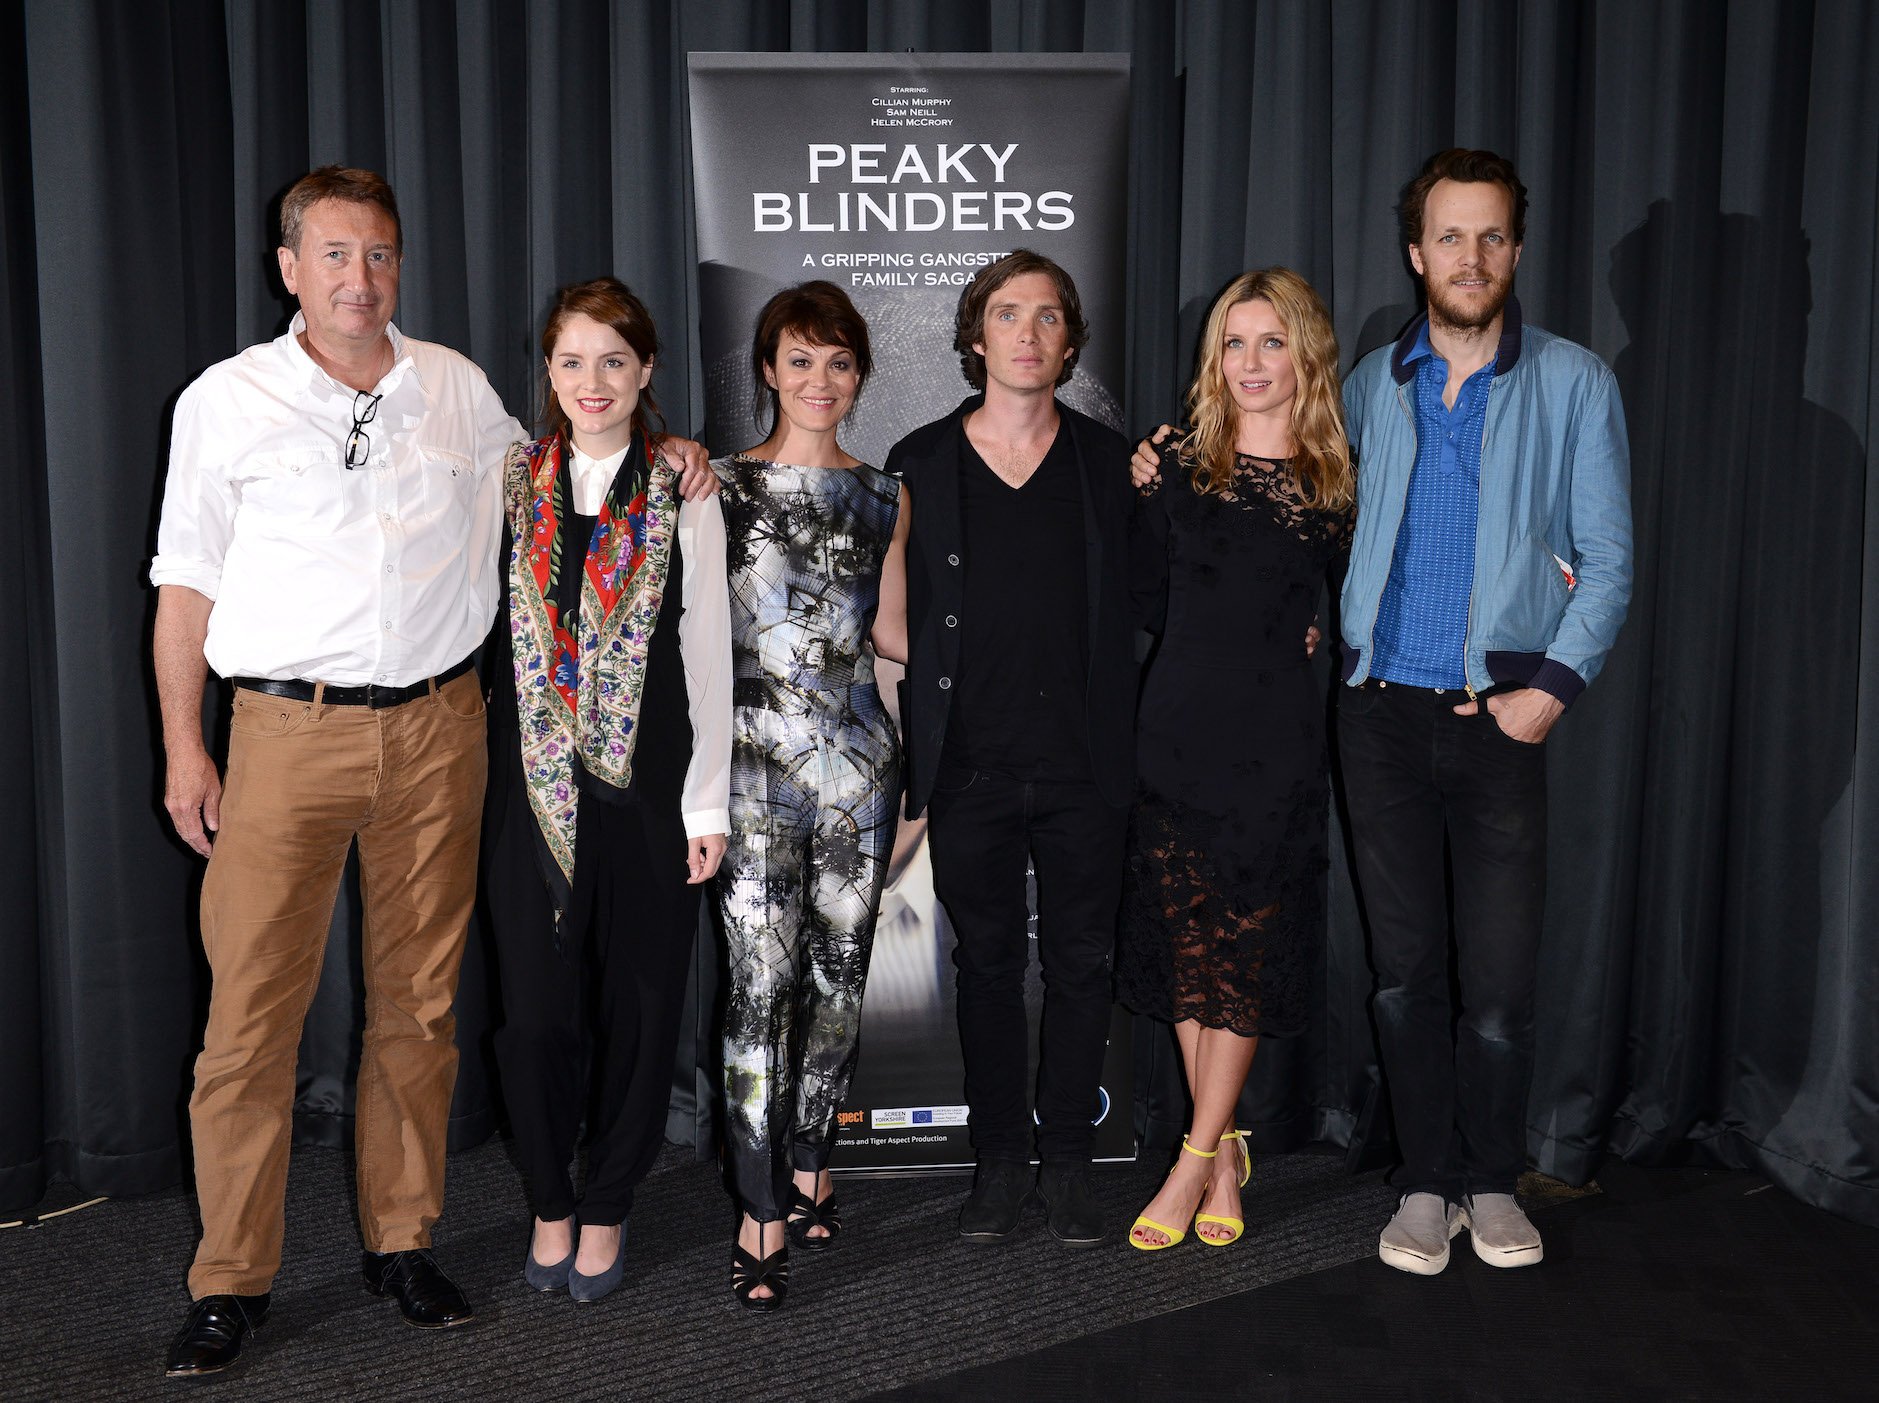 Peaky Blinders Cast Interview: Cillian Murphy, Annabelle Wallis